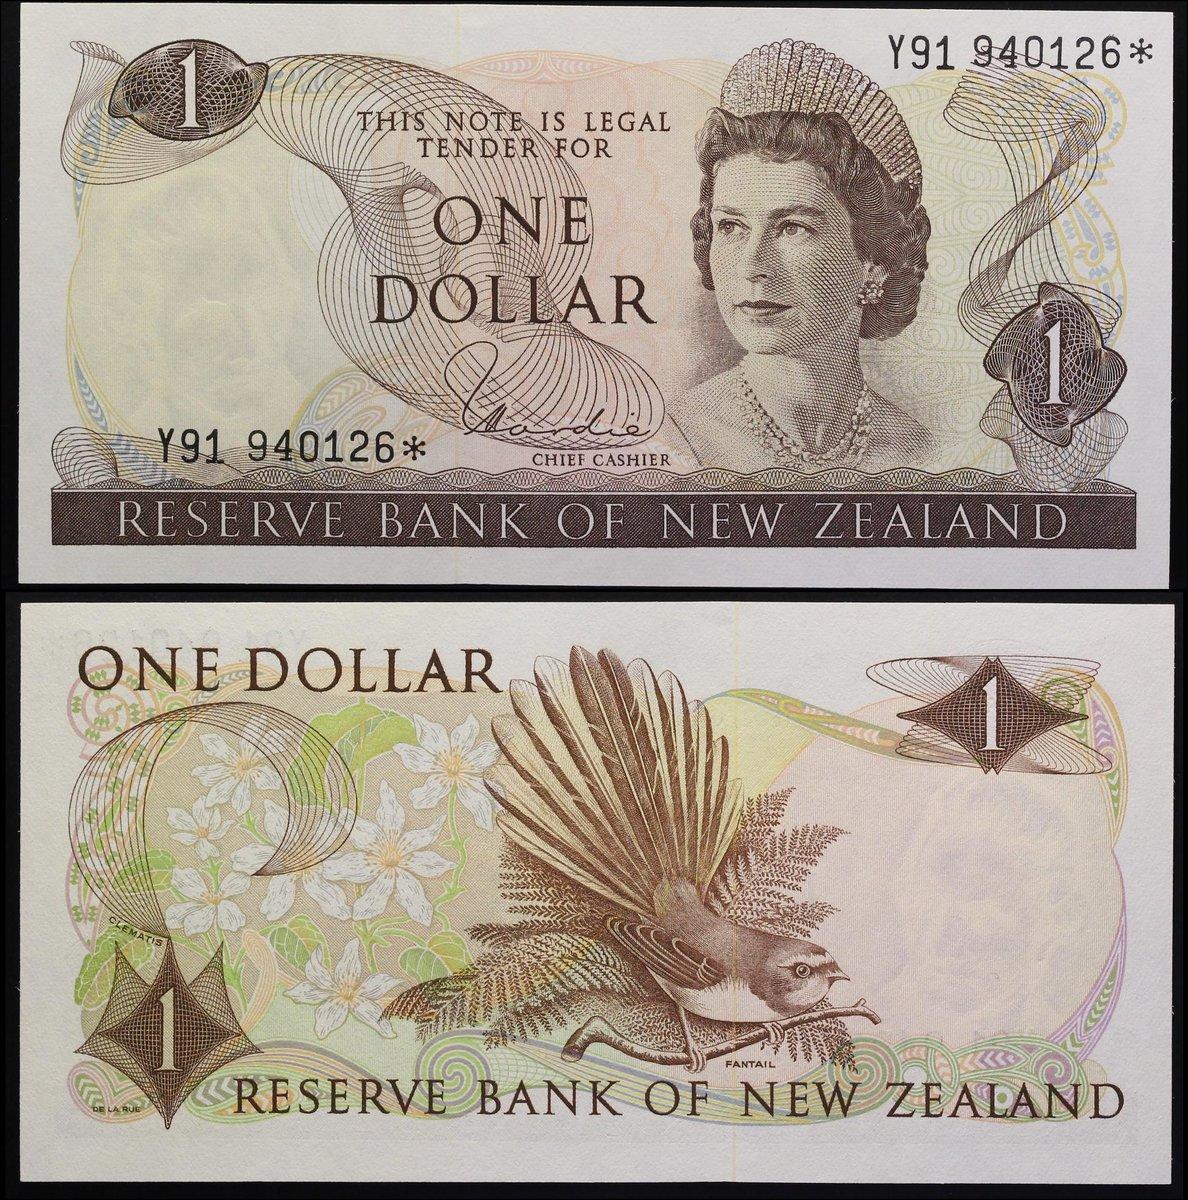 NEW ZEALAND 1 DOLLAR REPLACEMENT P 163 d HARDIE UNC 